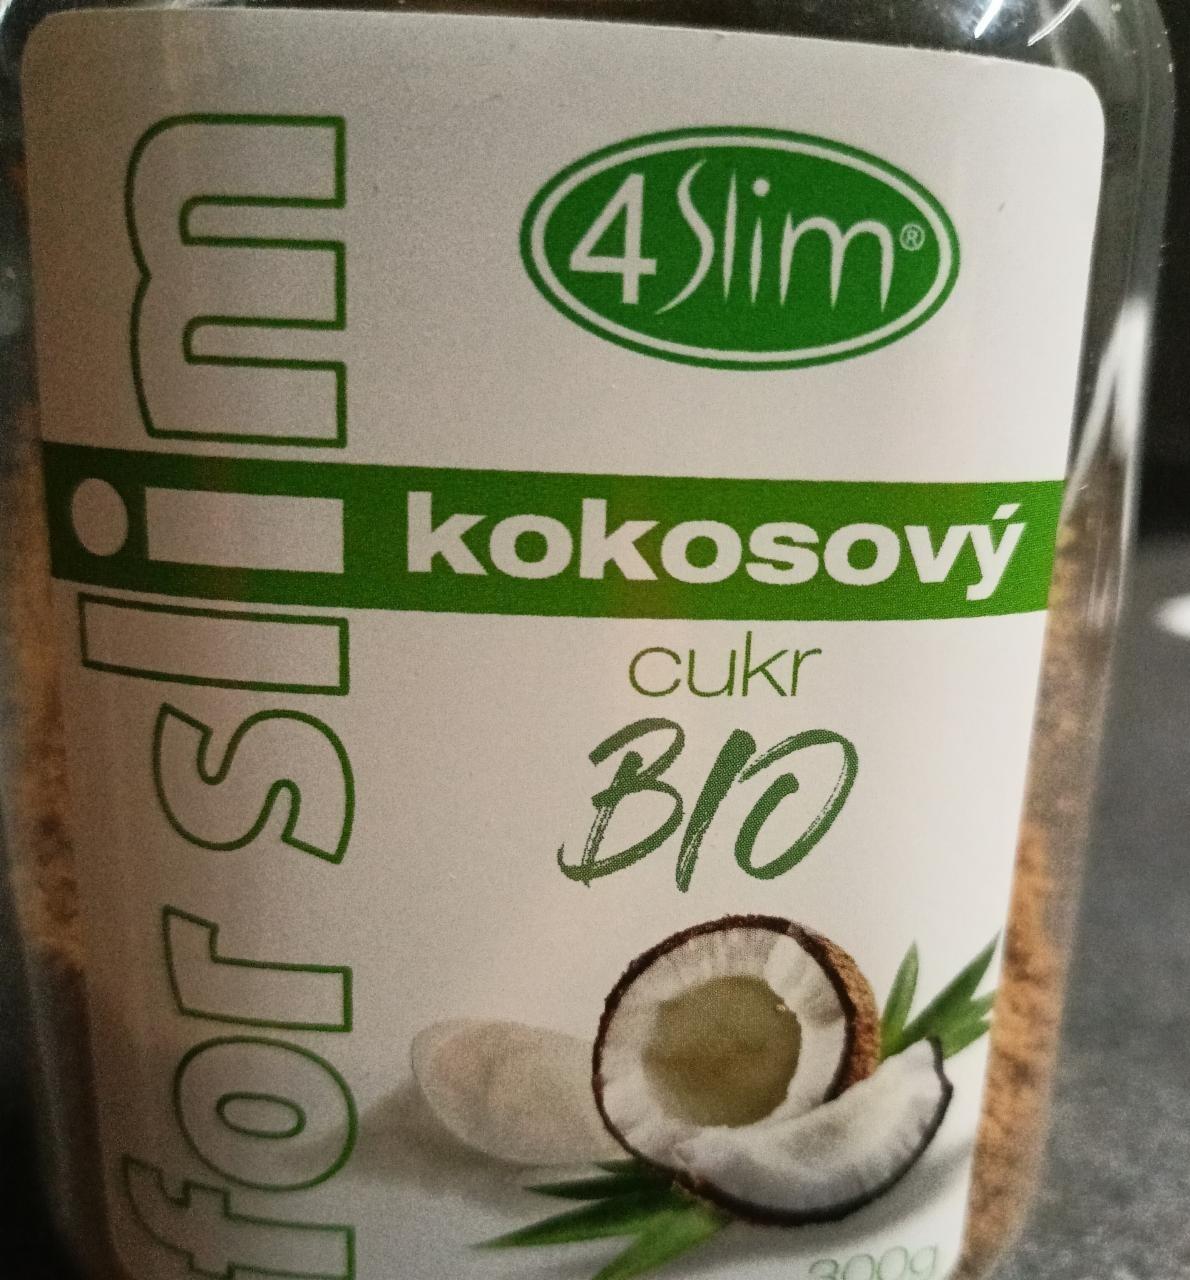 Fotografie - BIO Kokosový cukr 4Slim